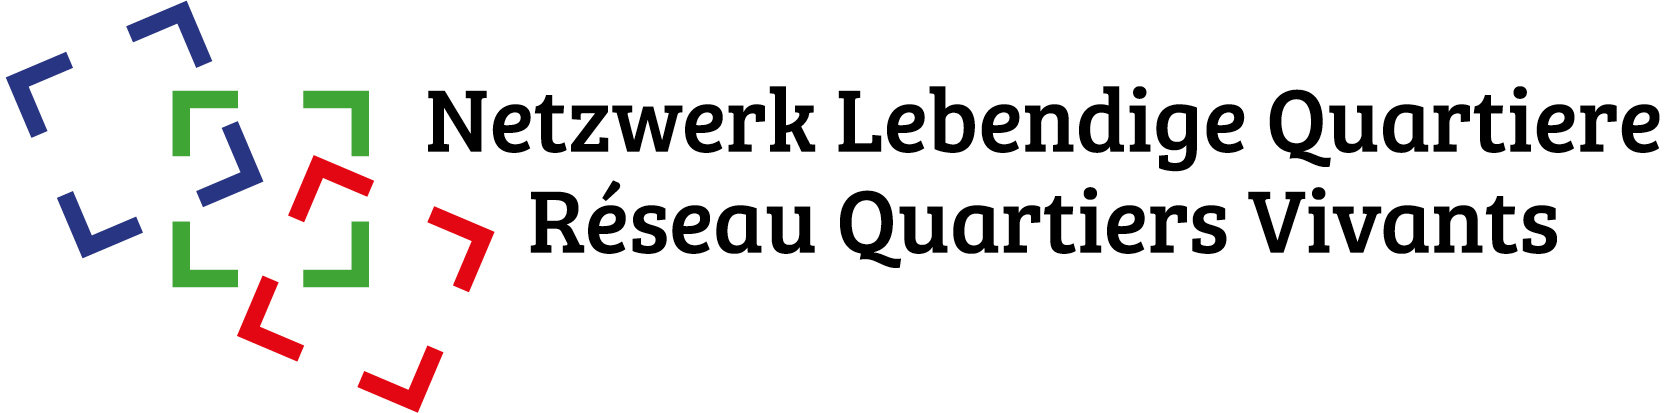 Logo_Netzwerk_Lebendige_Quartiere_2016